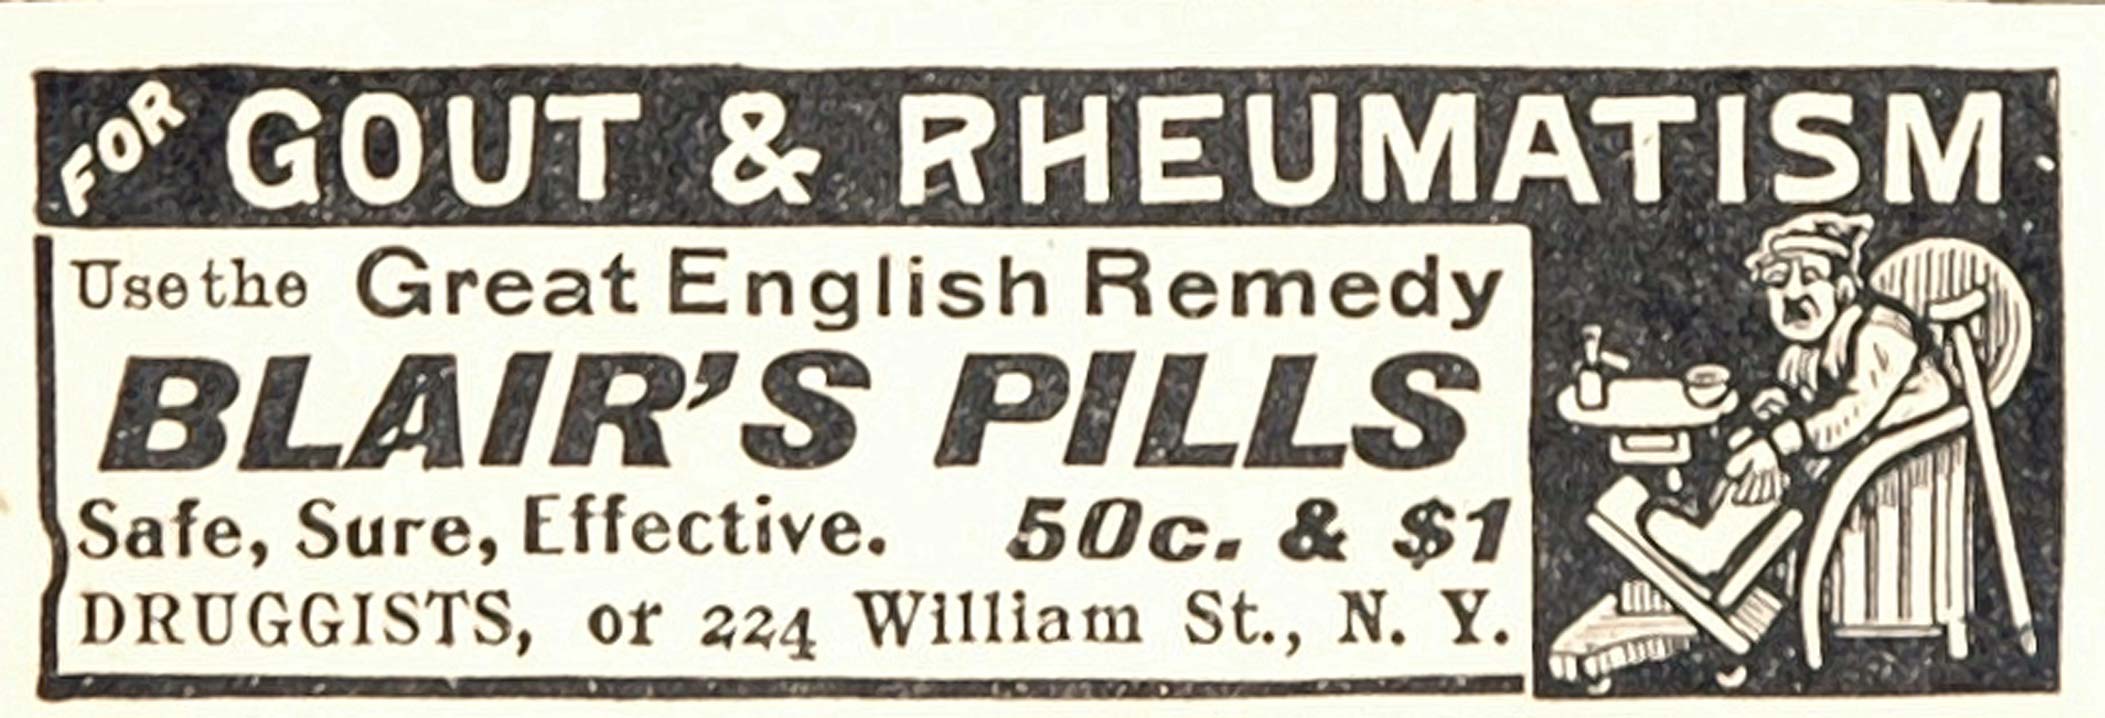 1900 Original Ad Blair's Pills Medical Quackery Remedy - ORIGINAL OLD3